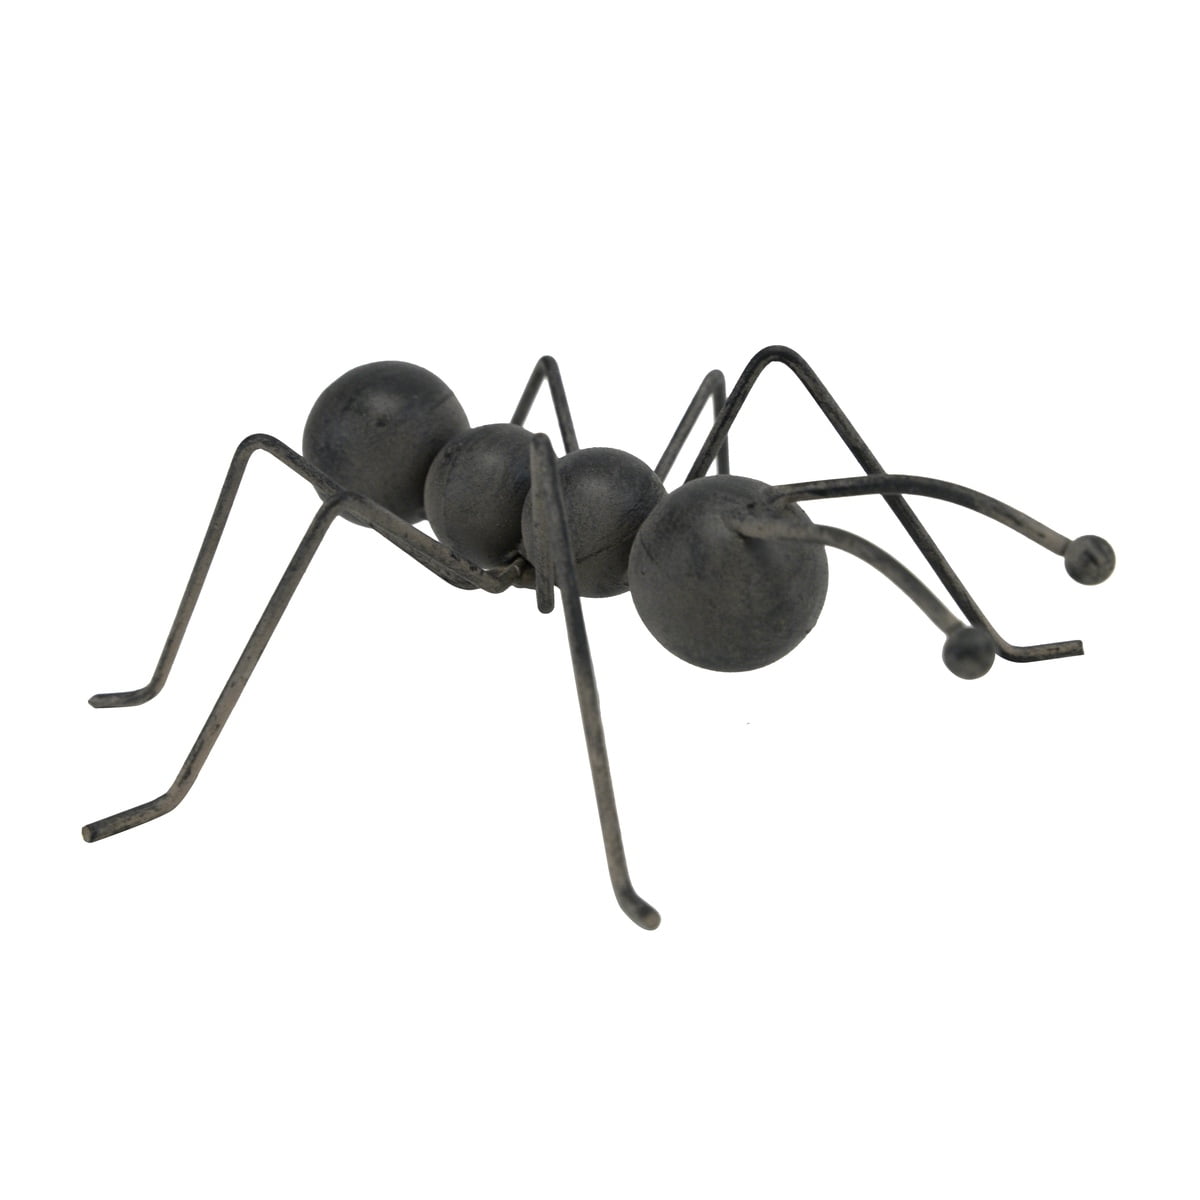 Gusseisendearmeise Ant Cast Iron Gartendeko Decorations Insect Garden 89013 